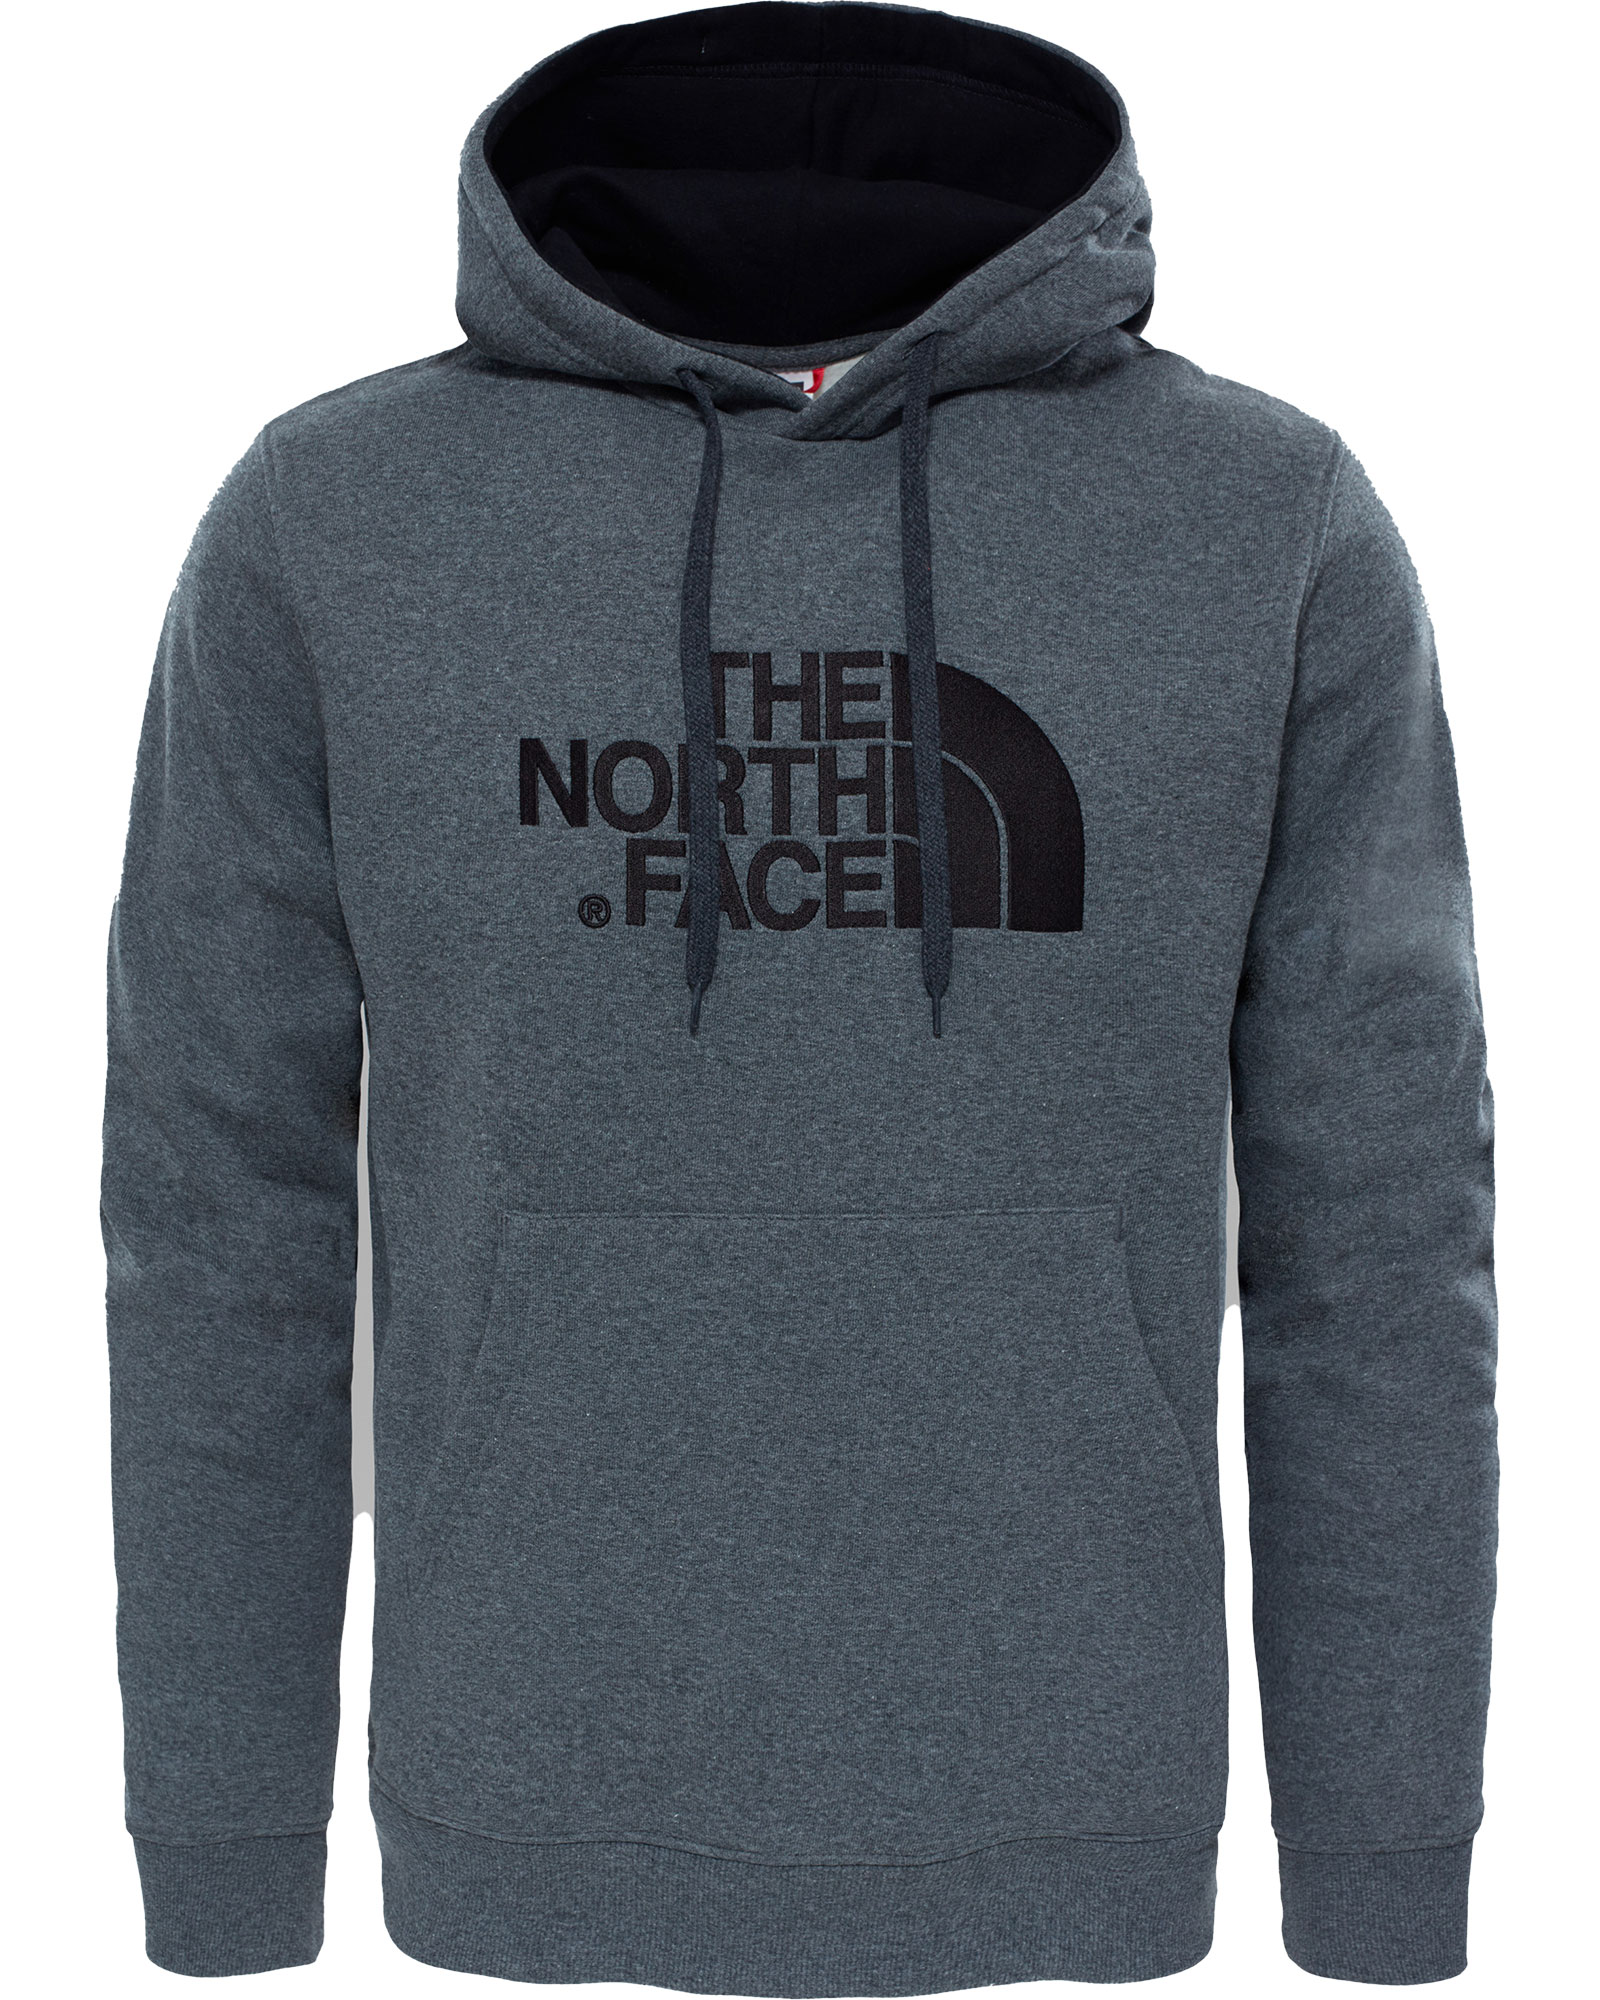 The North Face Drew Peak Men’s Hoodie - TNF Medium Grey Heather M